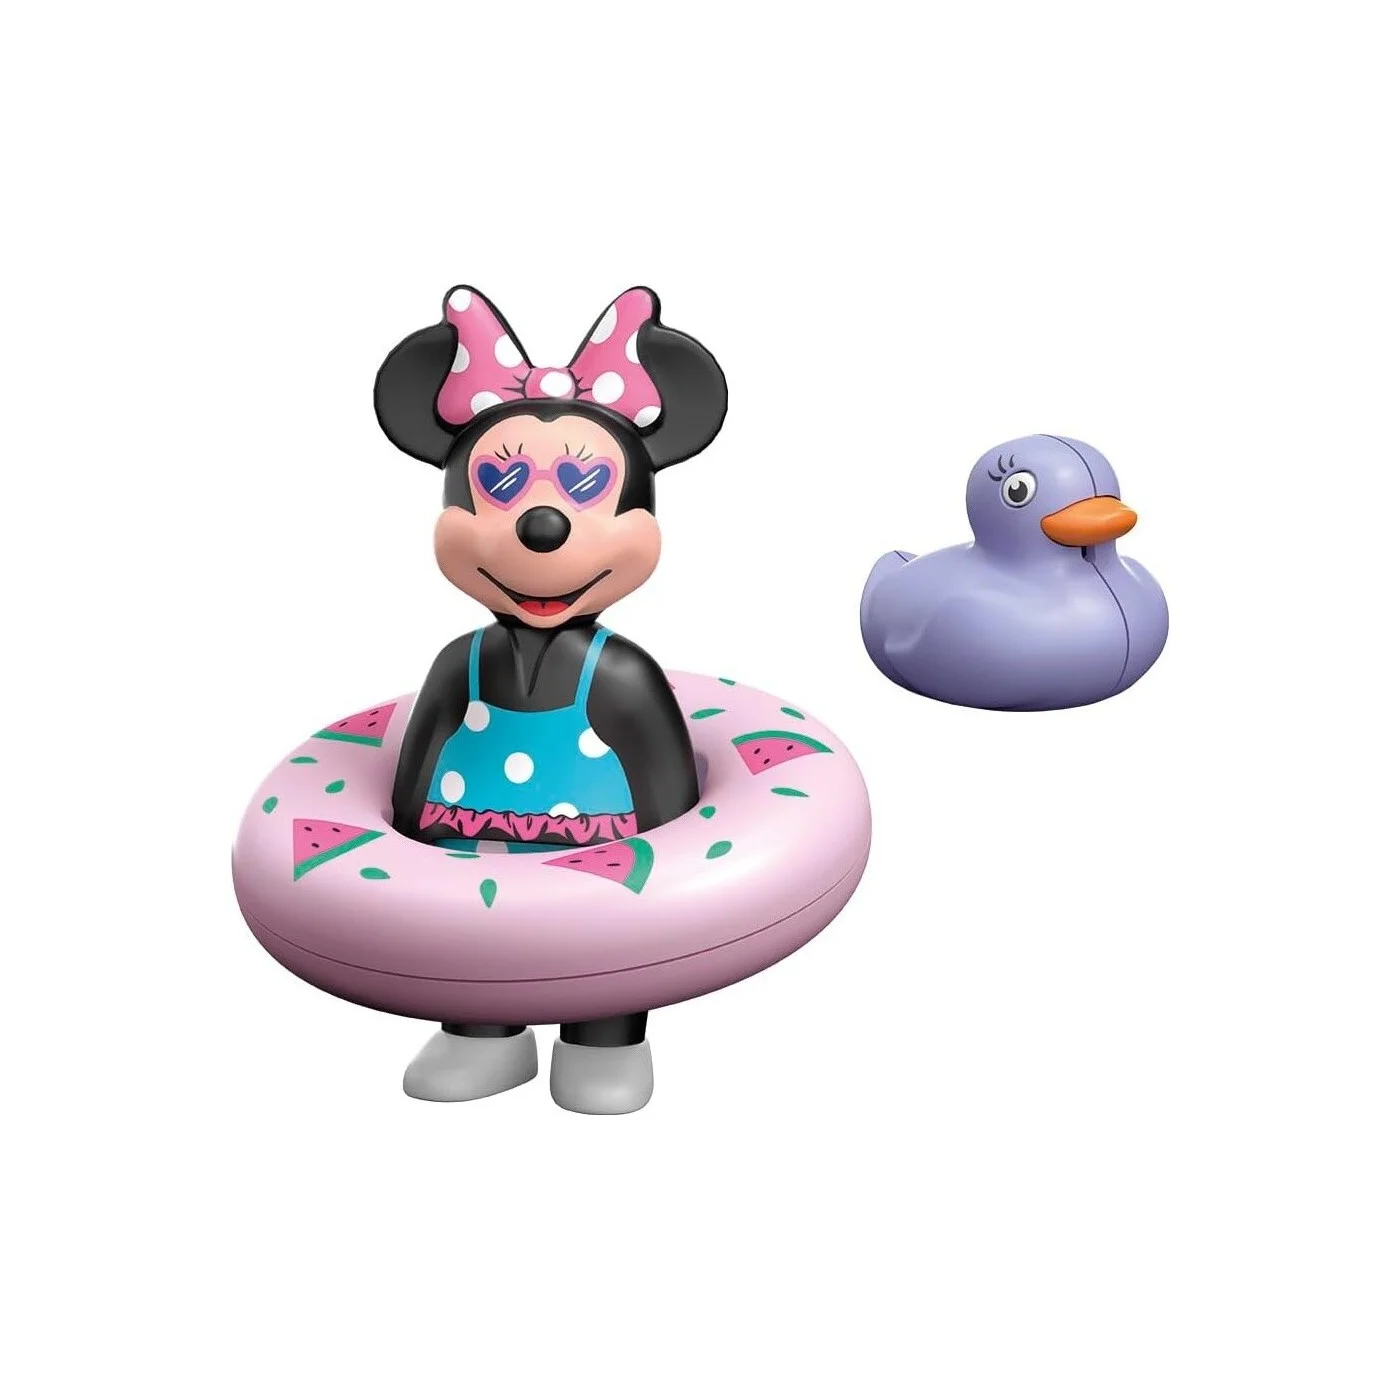 Playmobil Junior Aqua, Disney Mickey & Friends - Η Μίνι Μάους Είναι Έτοιμη Για Βουτιές 71706